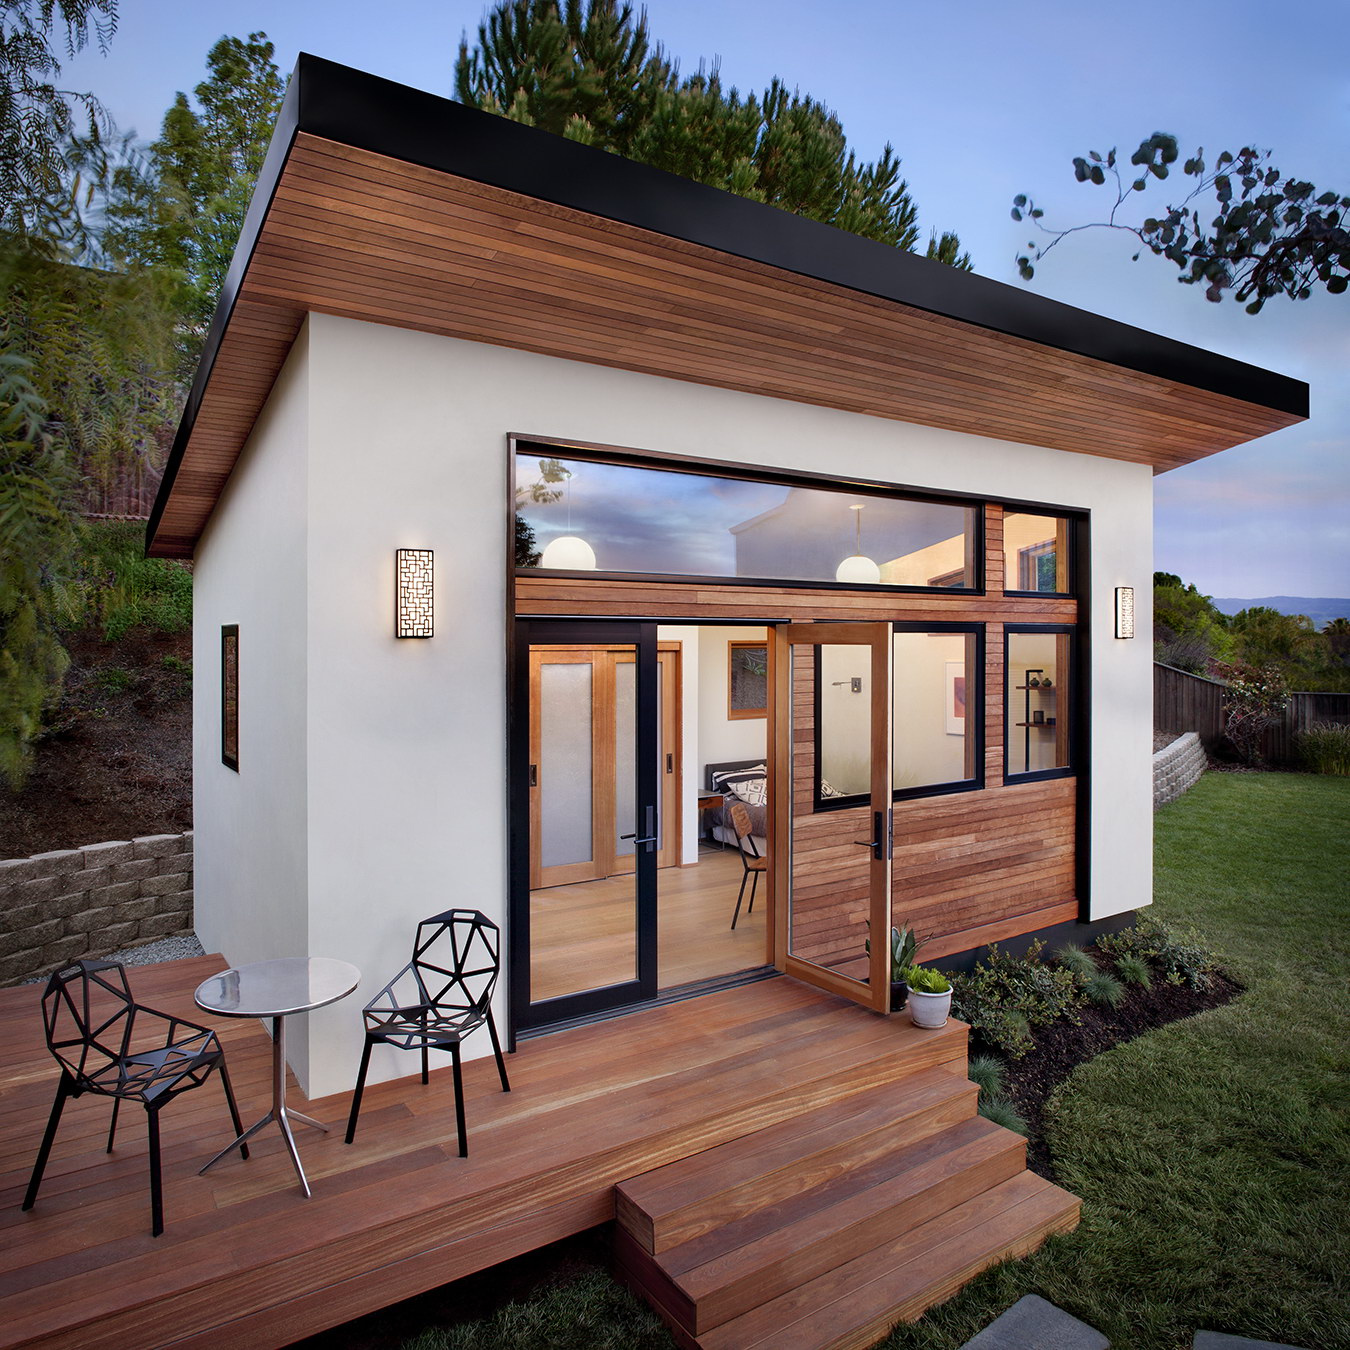 Prefabricated Tiny House by Avava Systems